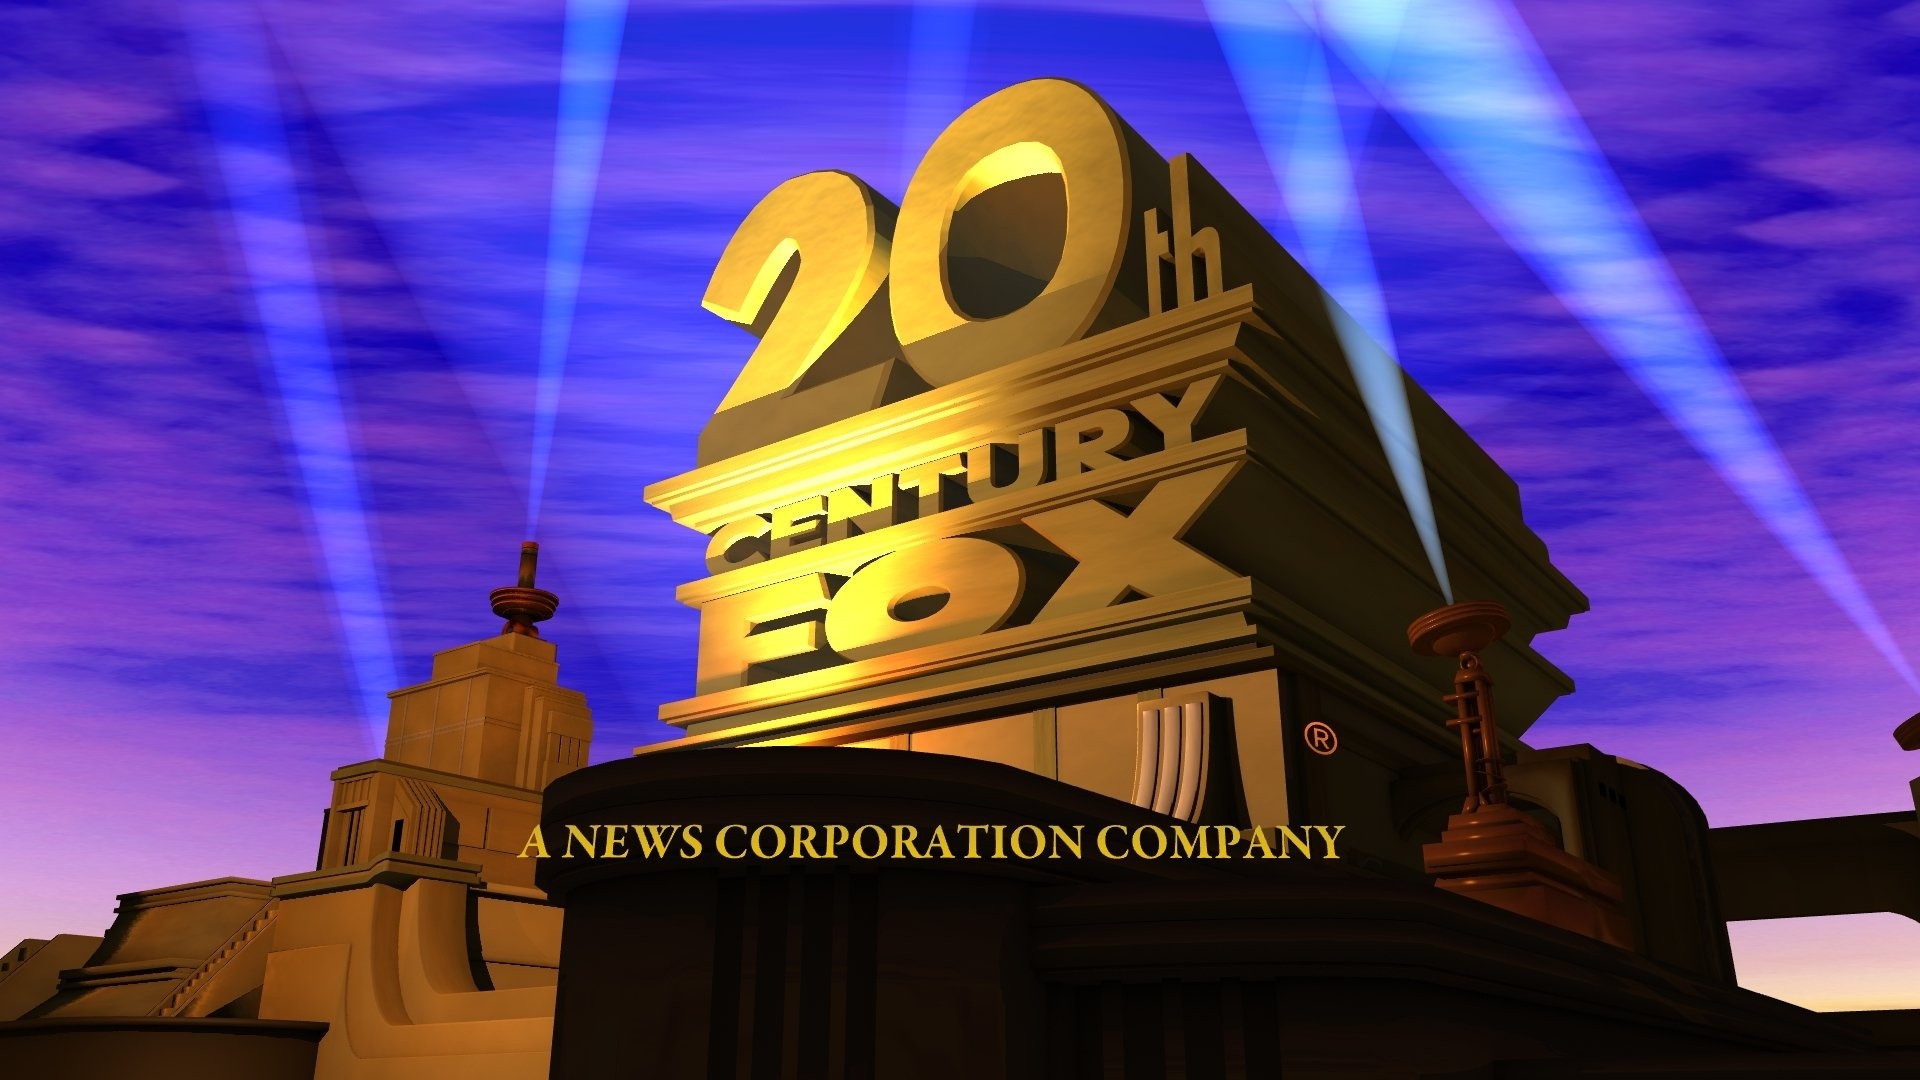 20th Century Fox logo, Cinematic history, Classic design, Recognizable symbol, 1920x1080 Full HD Desktop